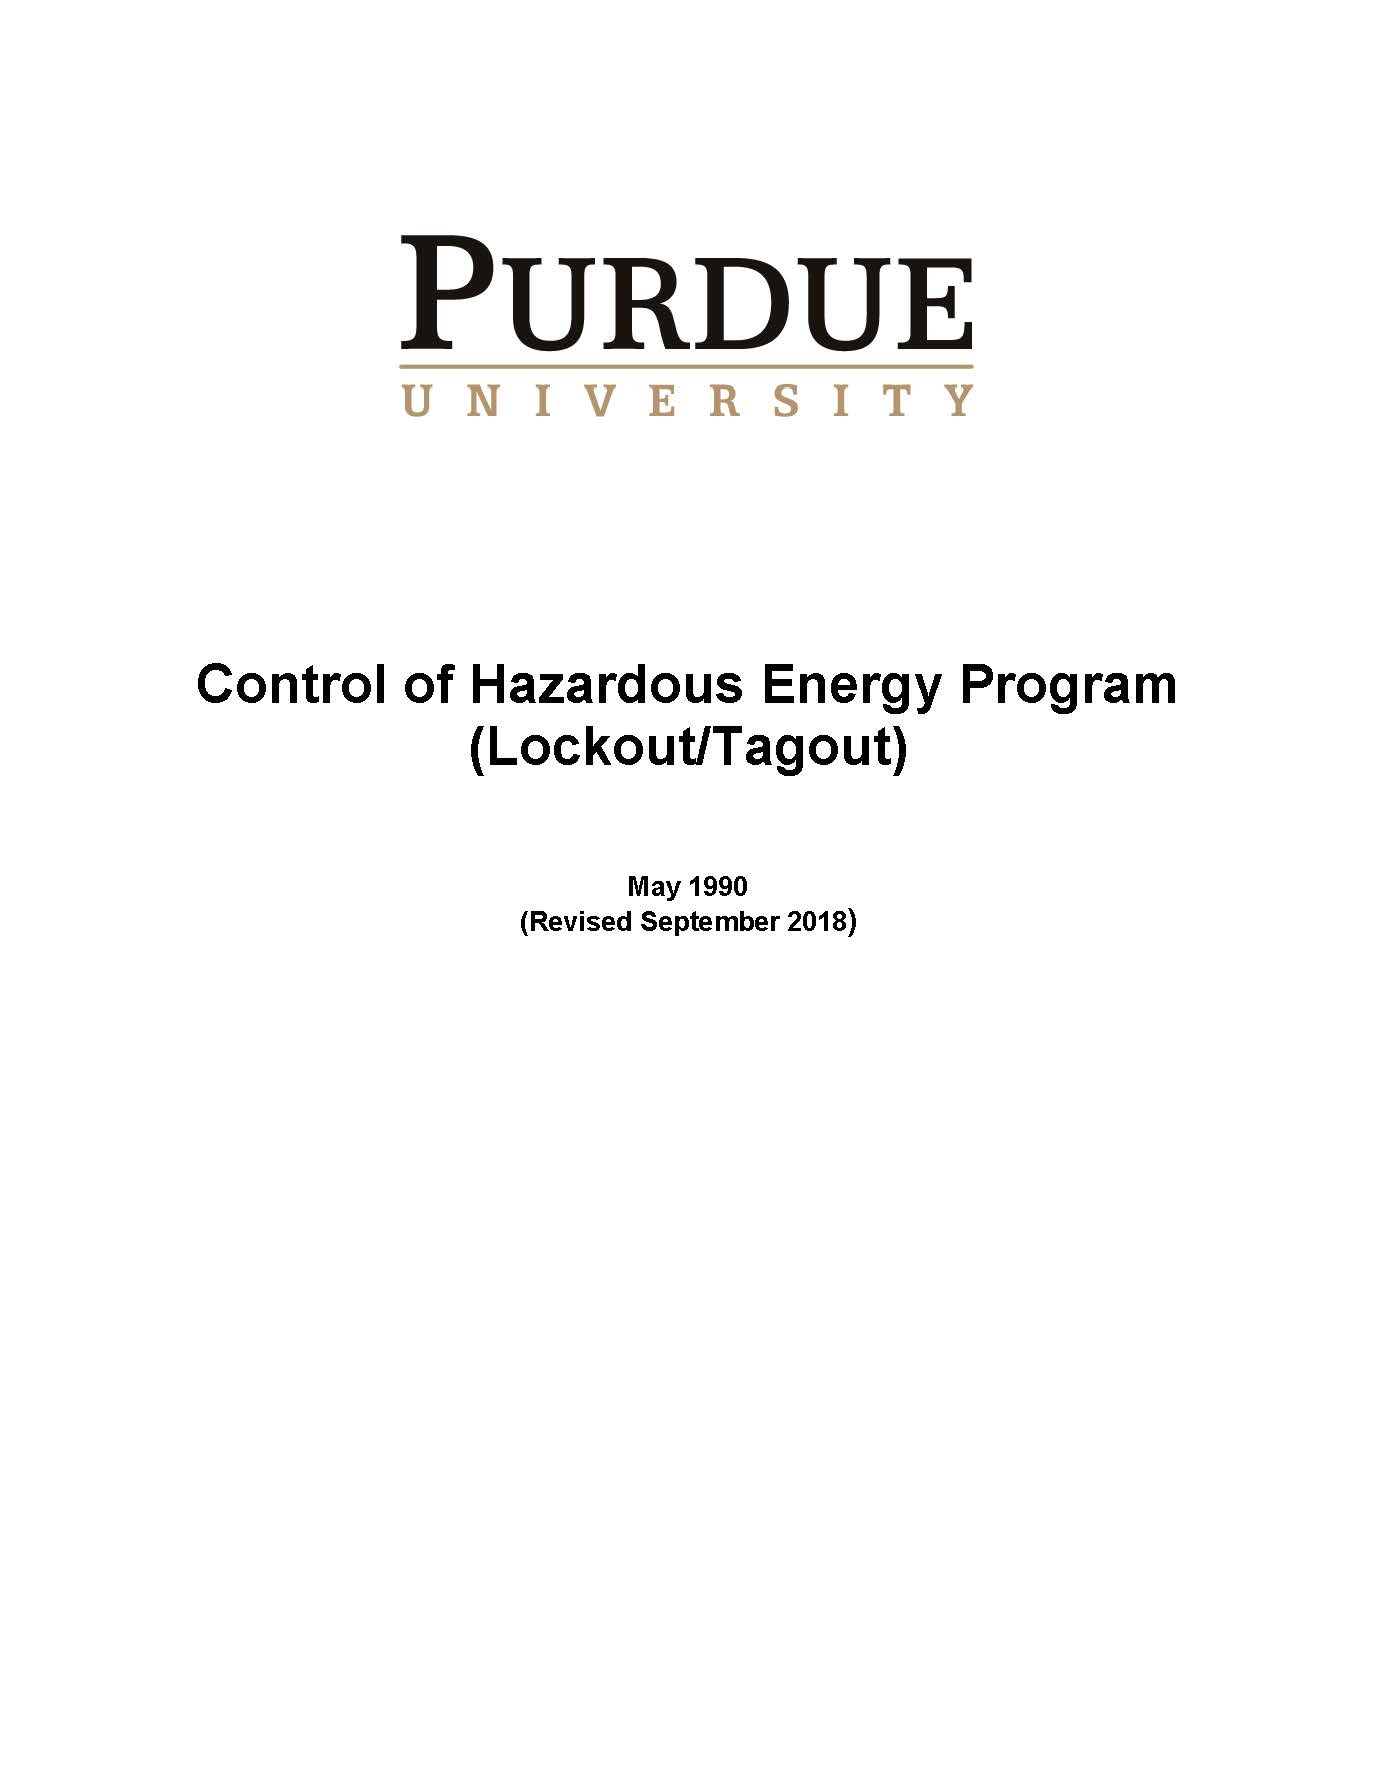 clickable link to the control of hazardous energy lockout tagout program